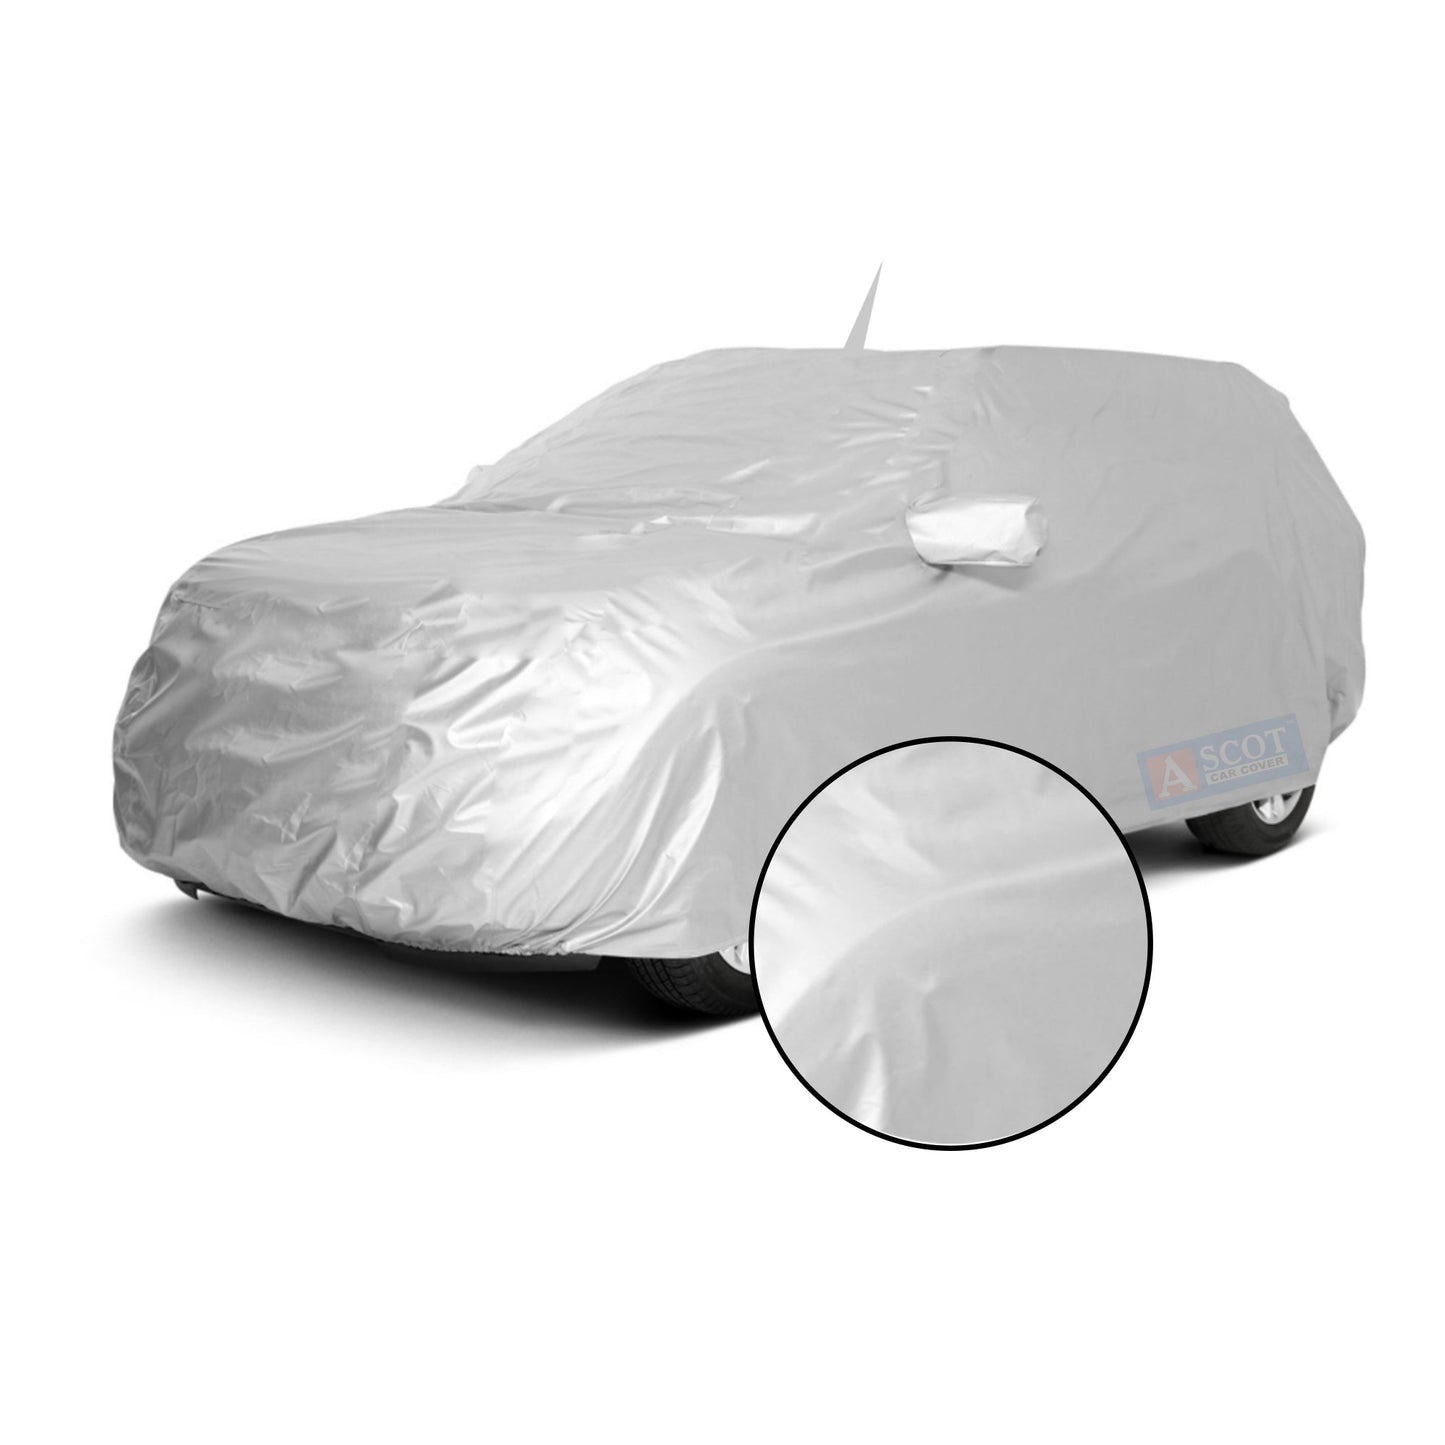 Ascot Maruti Suzuki Celerio 2014-2021 Model Car Body Cover Dust Proof, Trippel Stitched